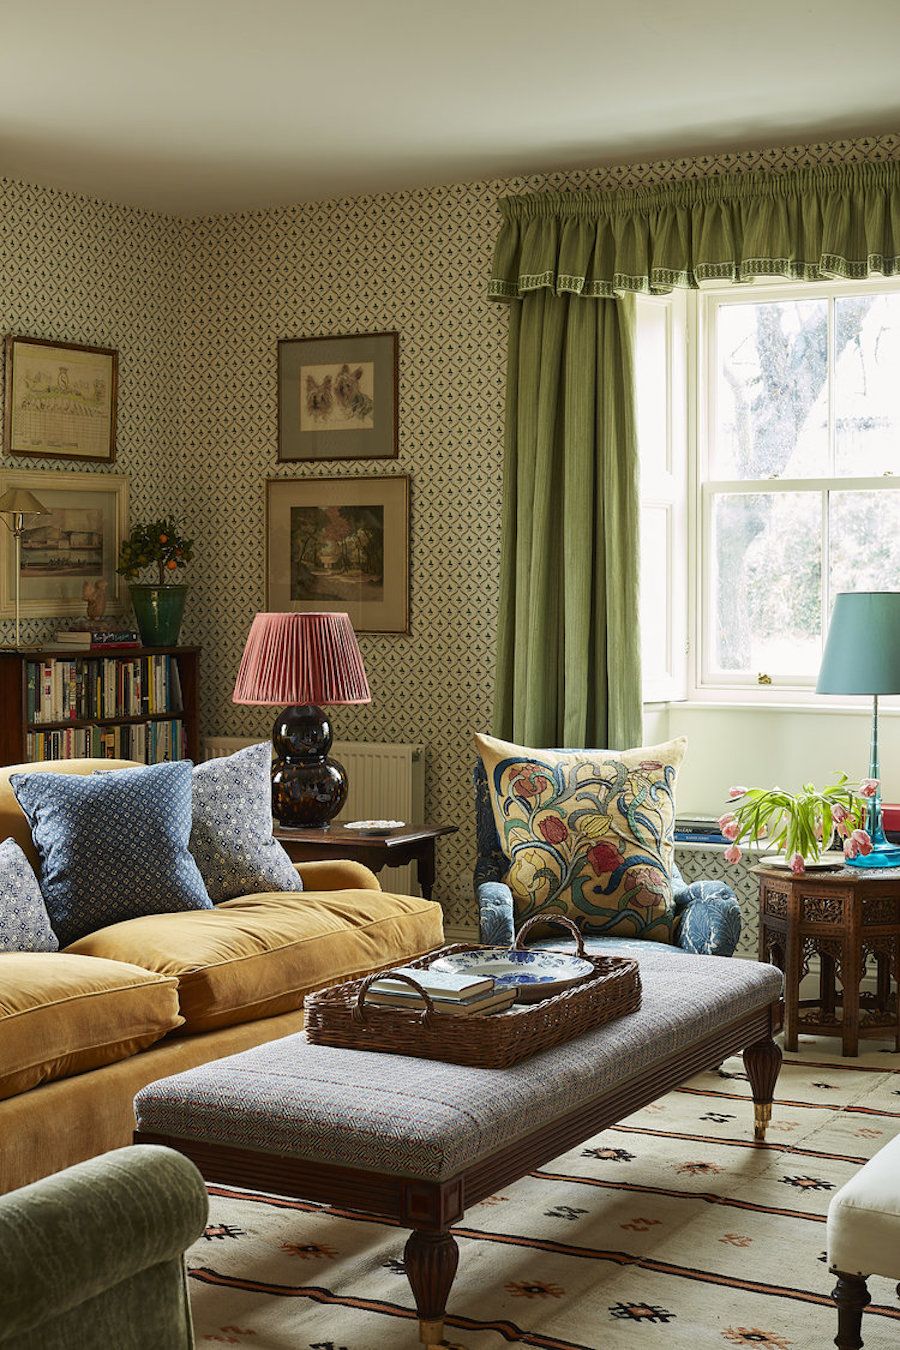 English-Country-Living-Room-with-Plush-Seating-and-Patterned-Wallpaper-via-Rita-Konig.jpg